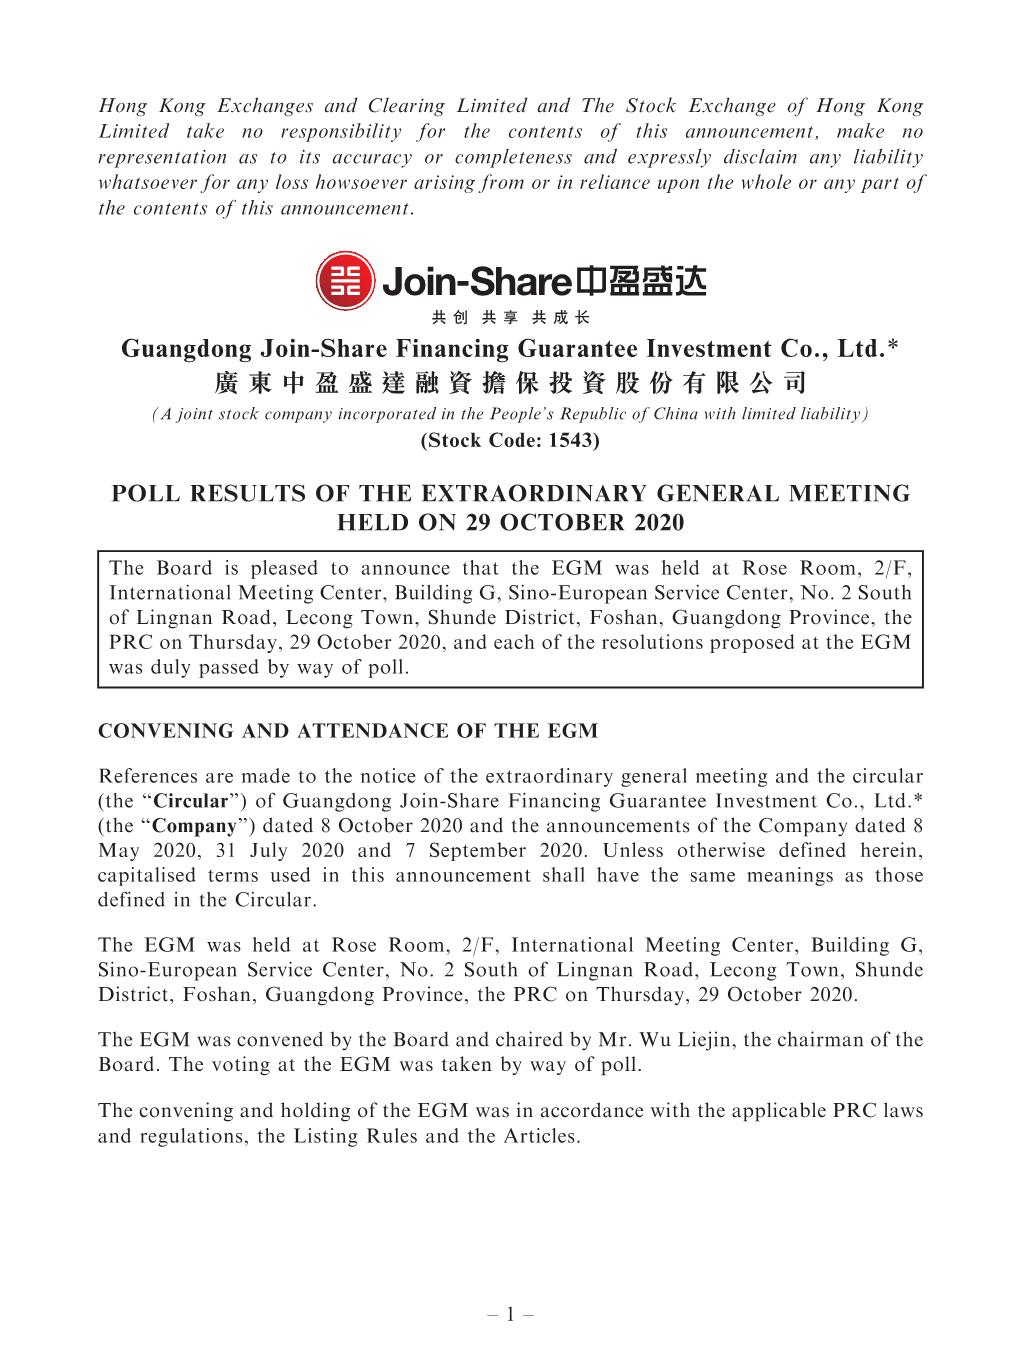 Guangdong Join-Share Financing Guarantee Investment Co., Ltd.* 廣東中盈盛達融資擔保投資股份有限公司